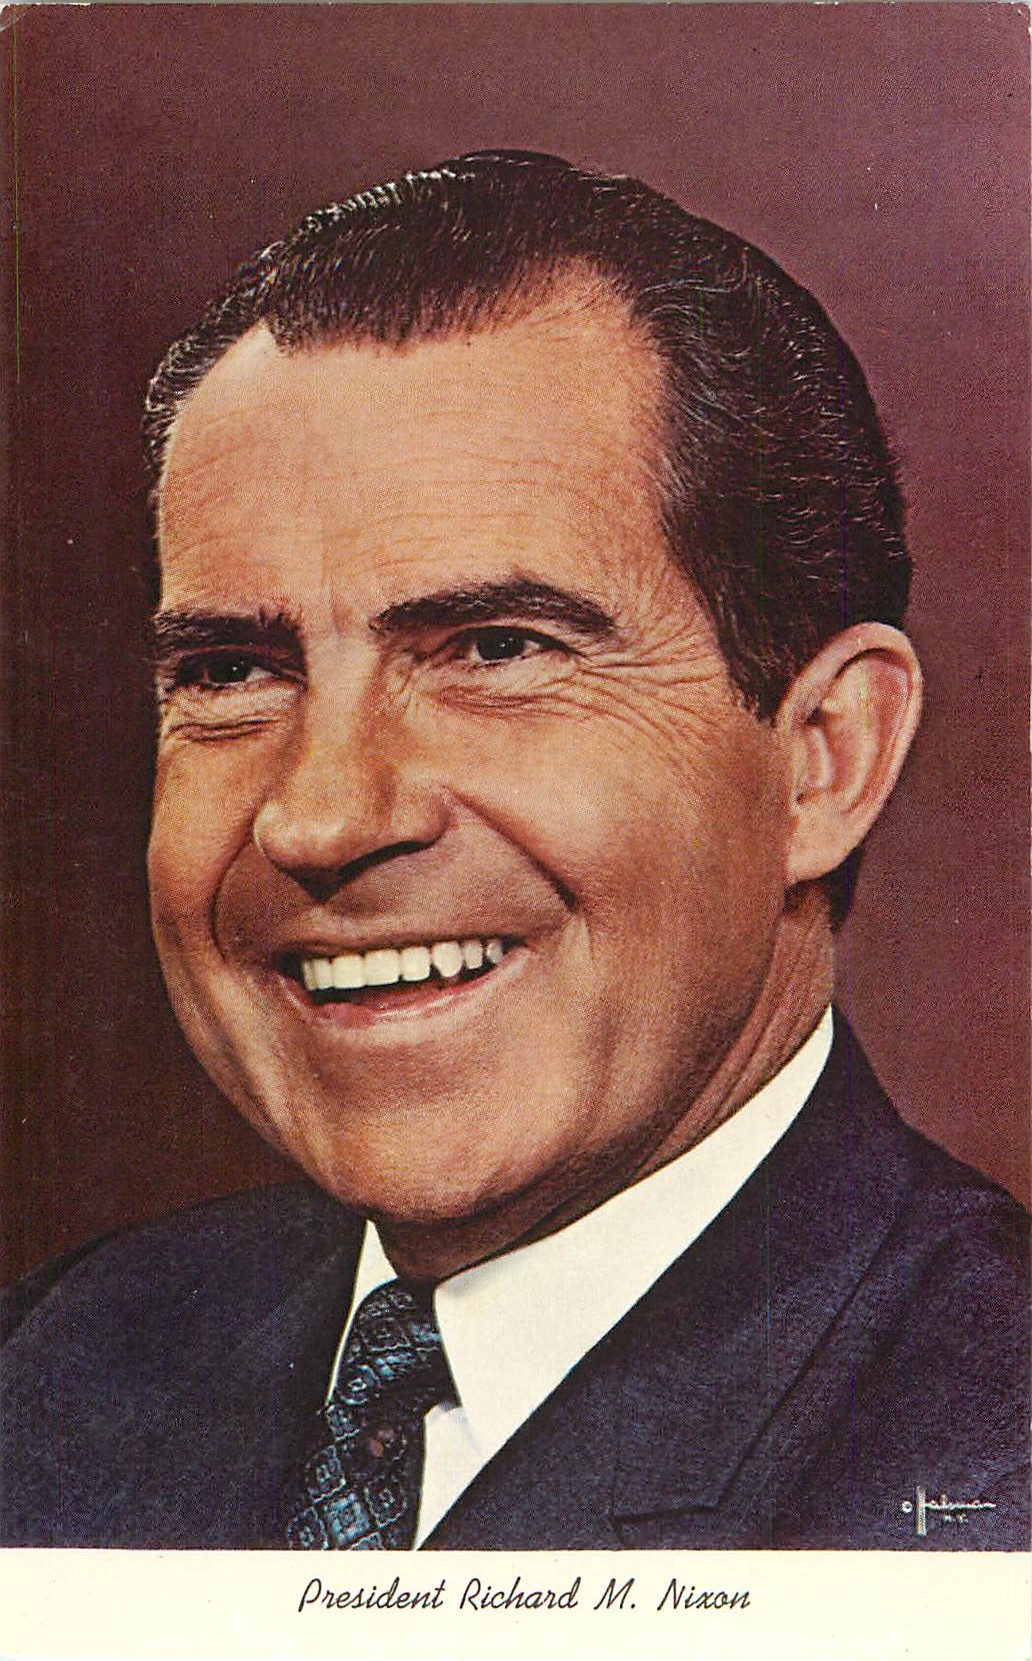 "President Richard Nixon"